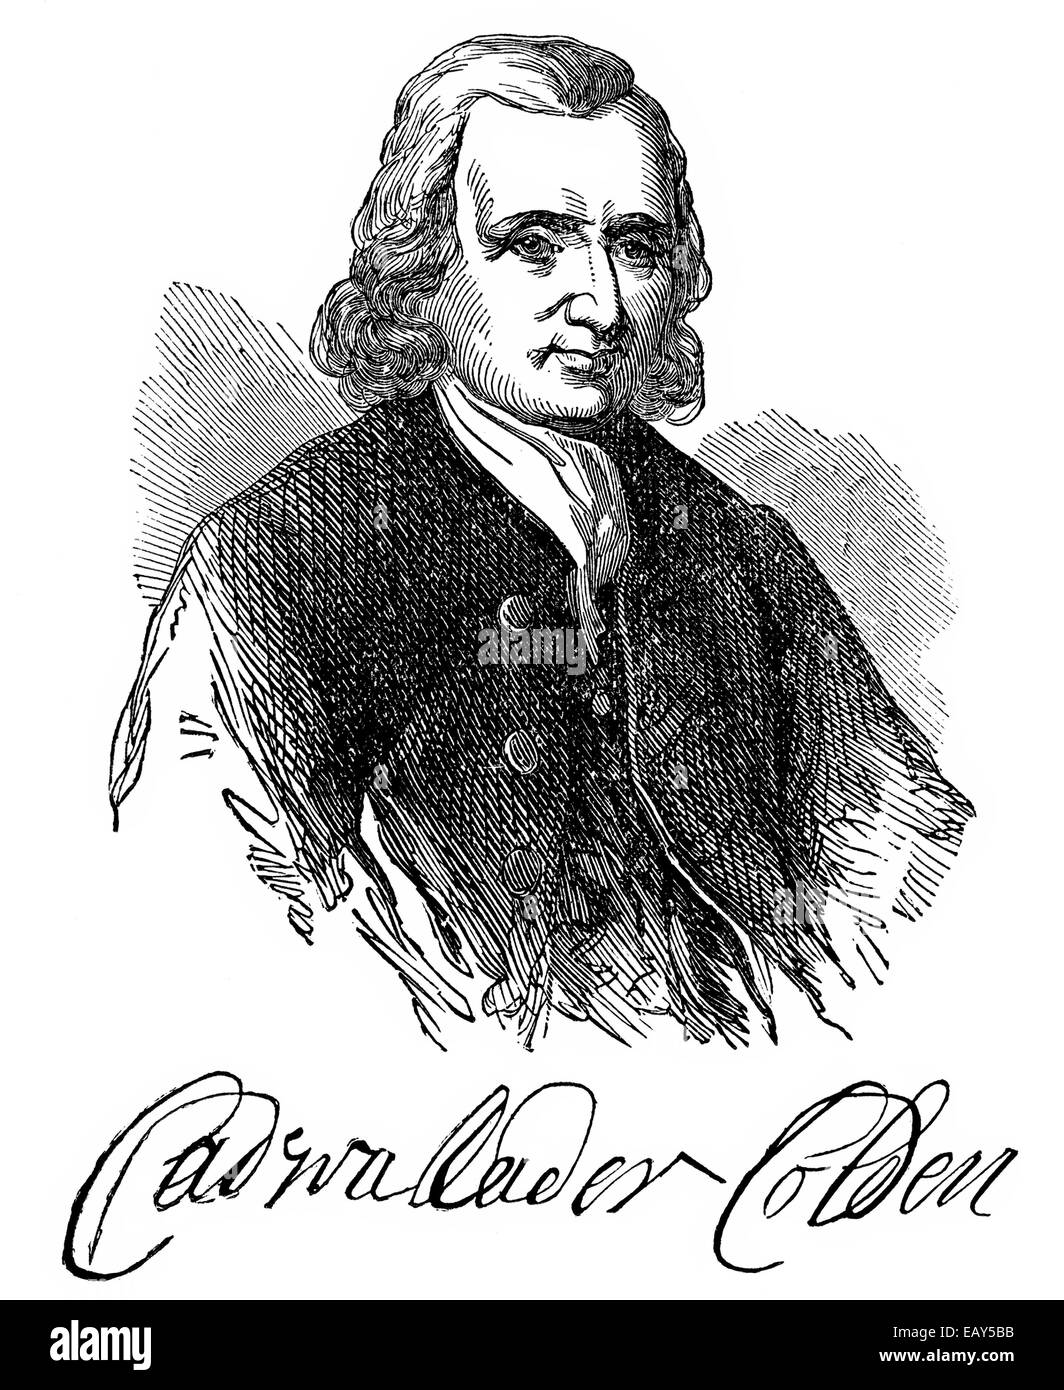 Cadwallader Colden, 1688 - 1776, a doctor, farmer, land surveyor, botanist and Governor of the Province of New York , Portrait v Stock Photo